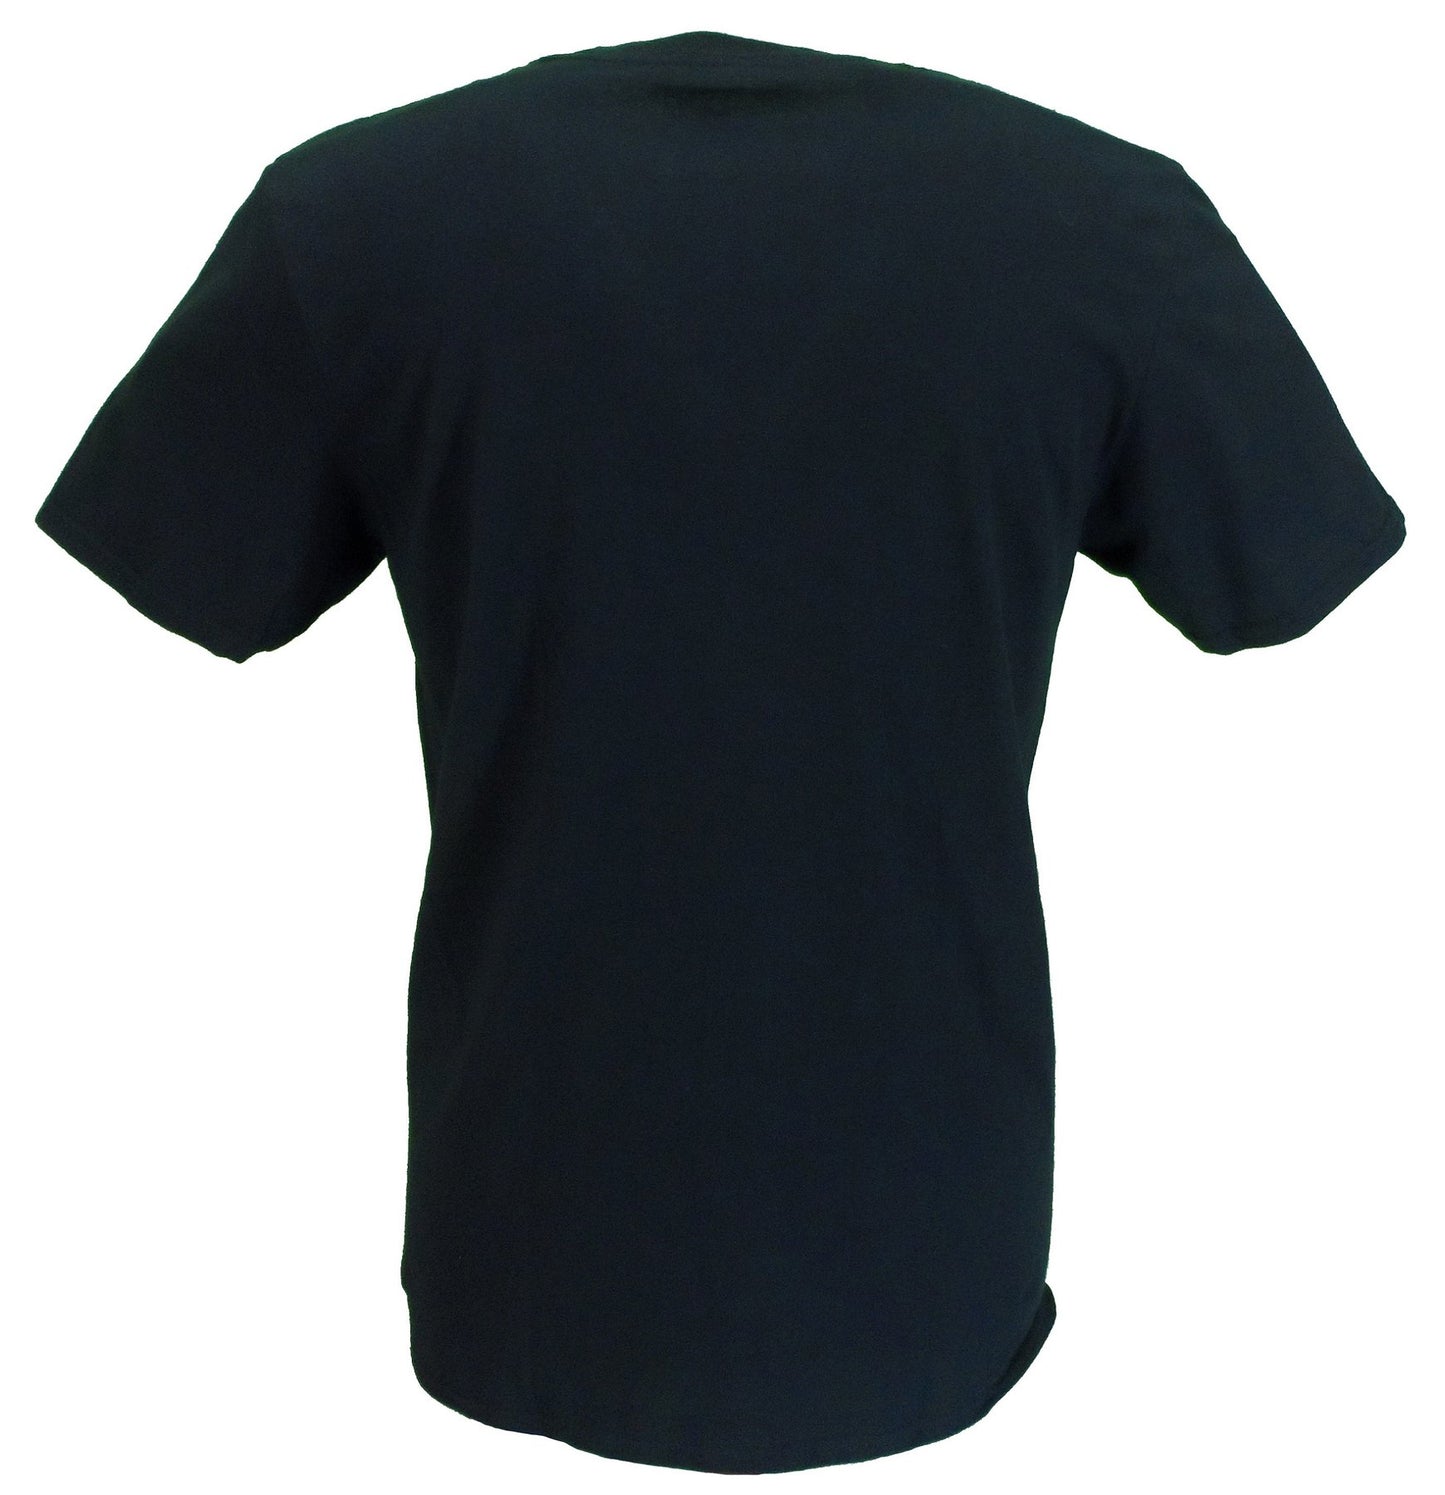 Camiseta oficial negra con dedos meñiques rígidos para hombre, camiseta con volante